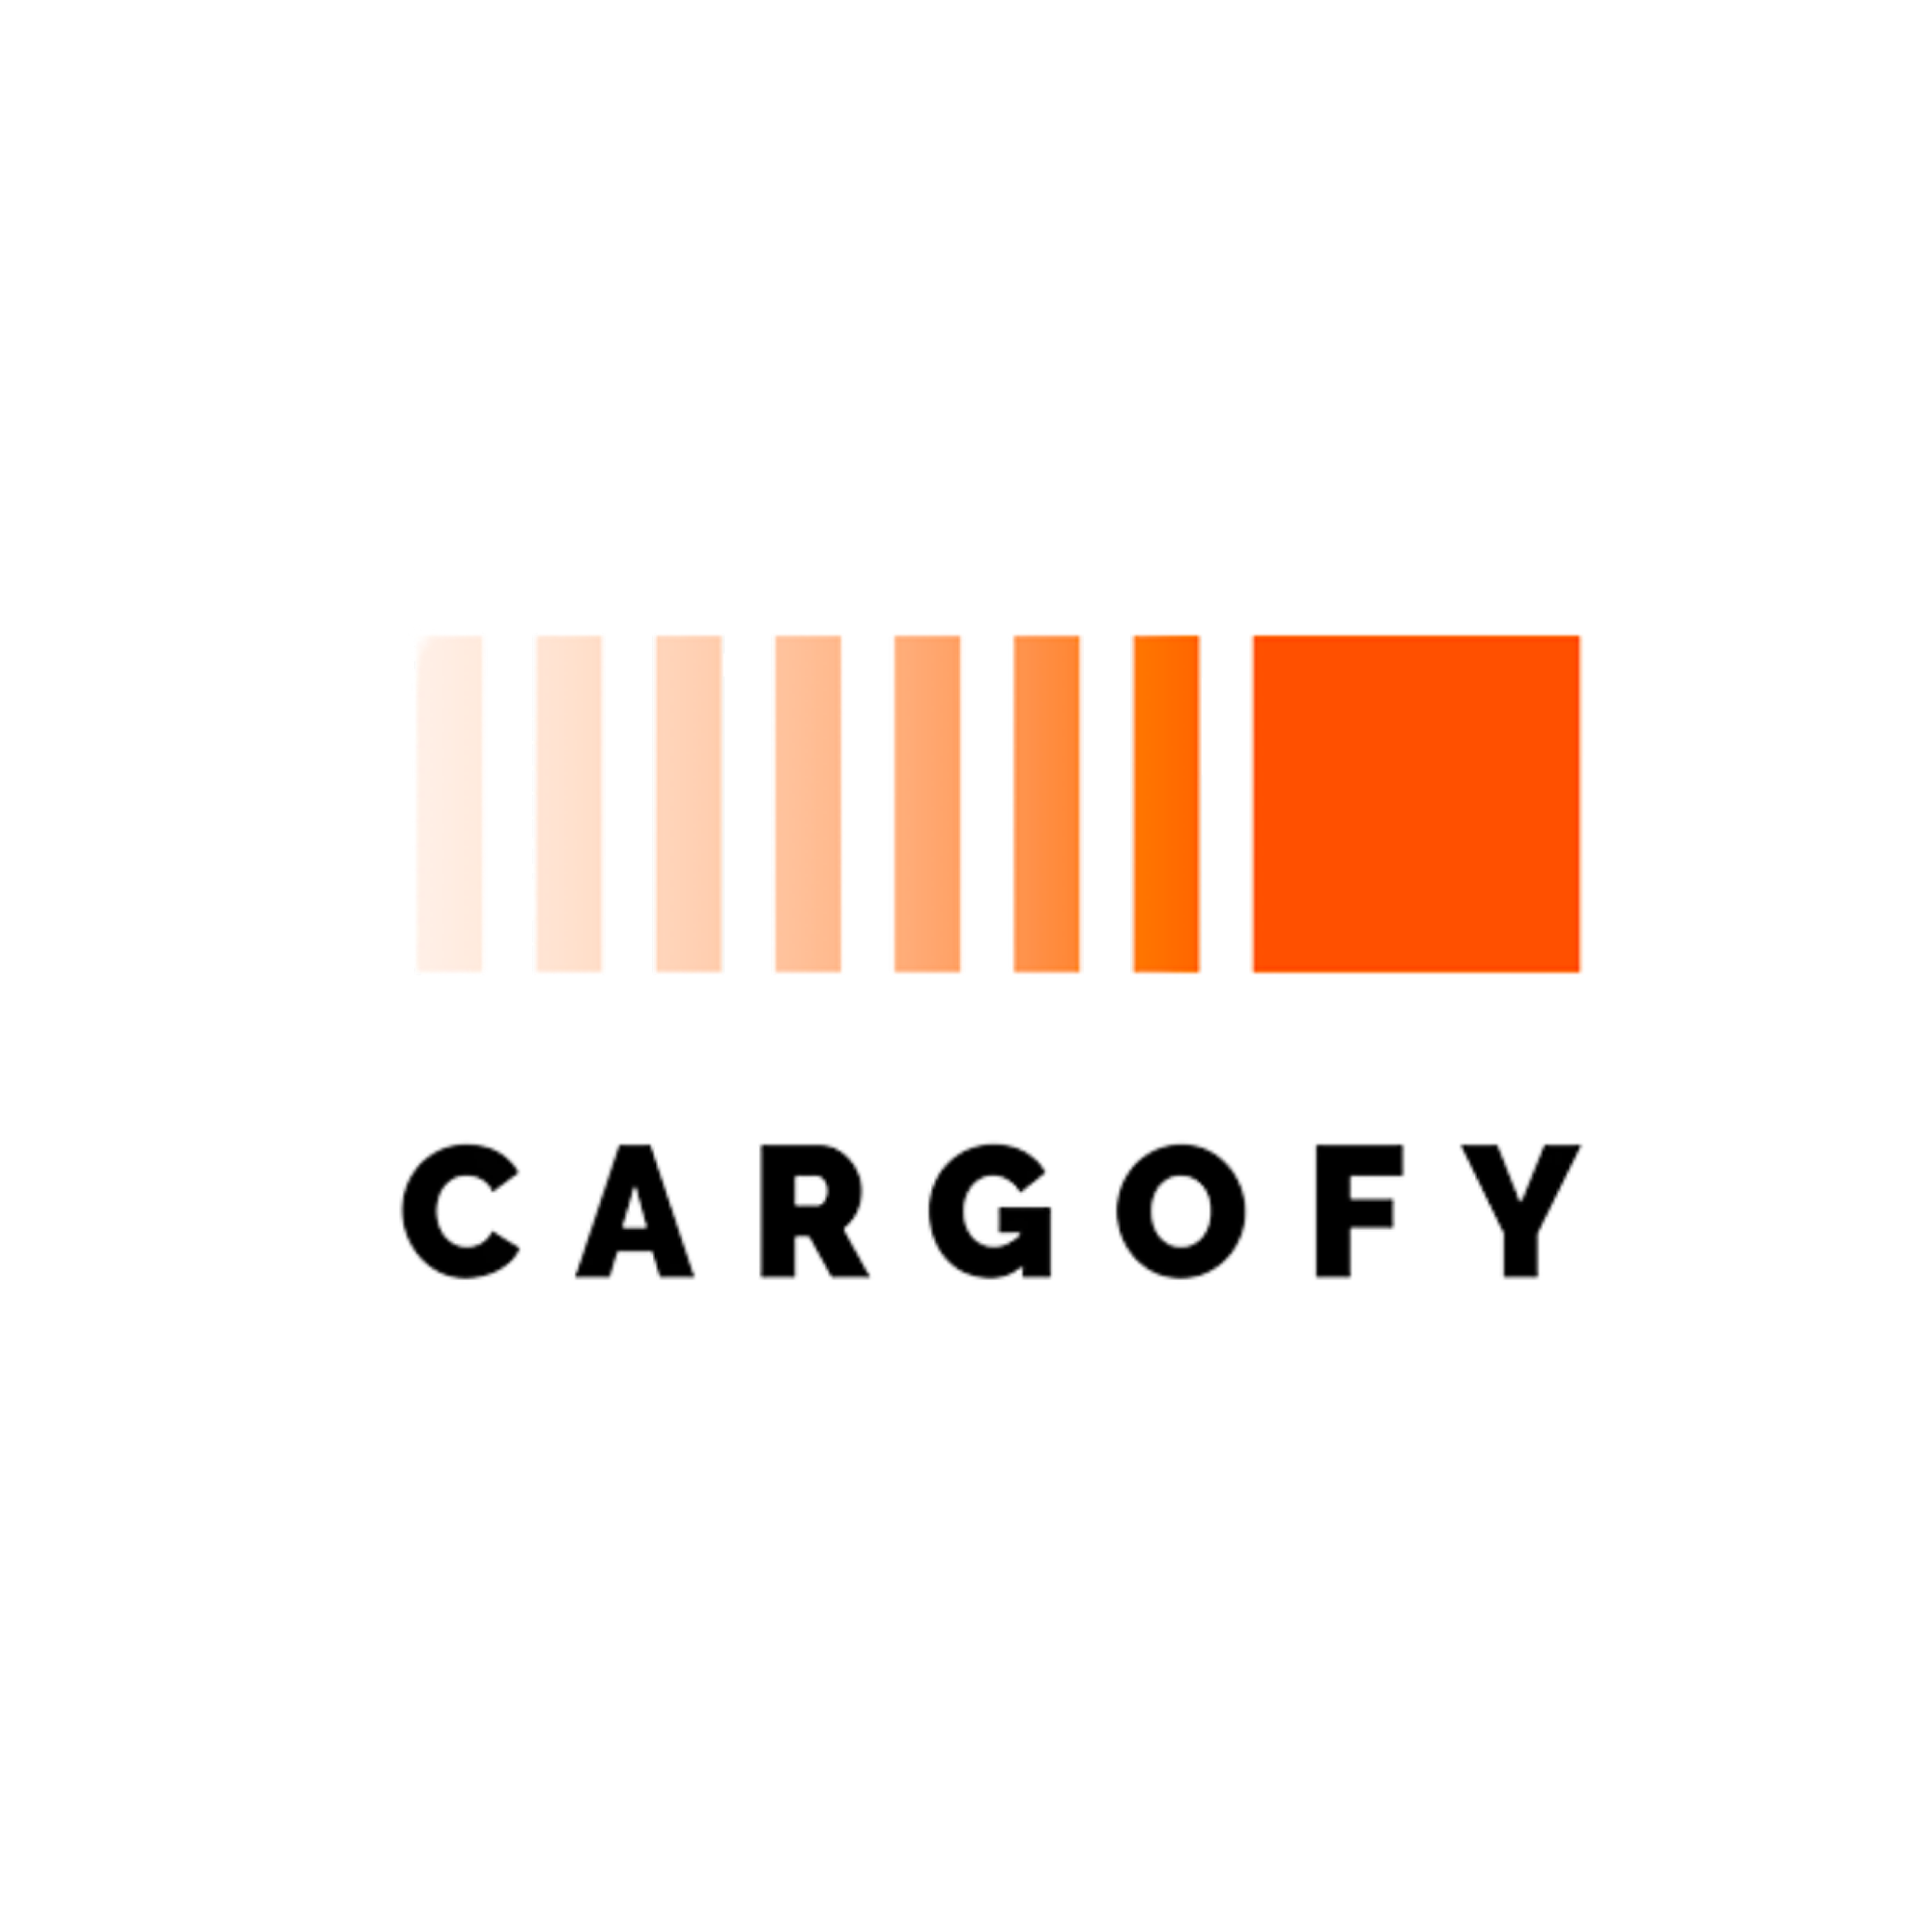 Cargofy